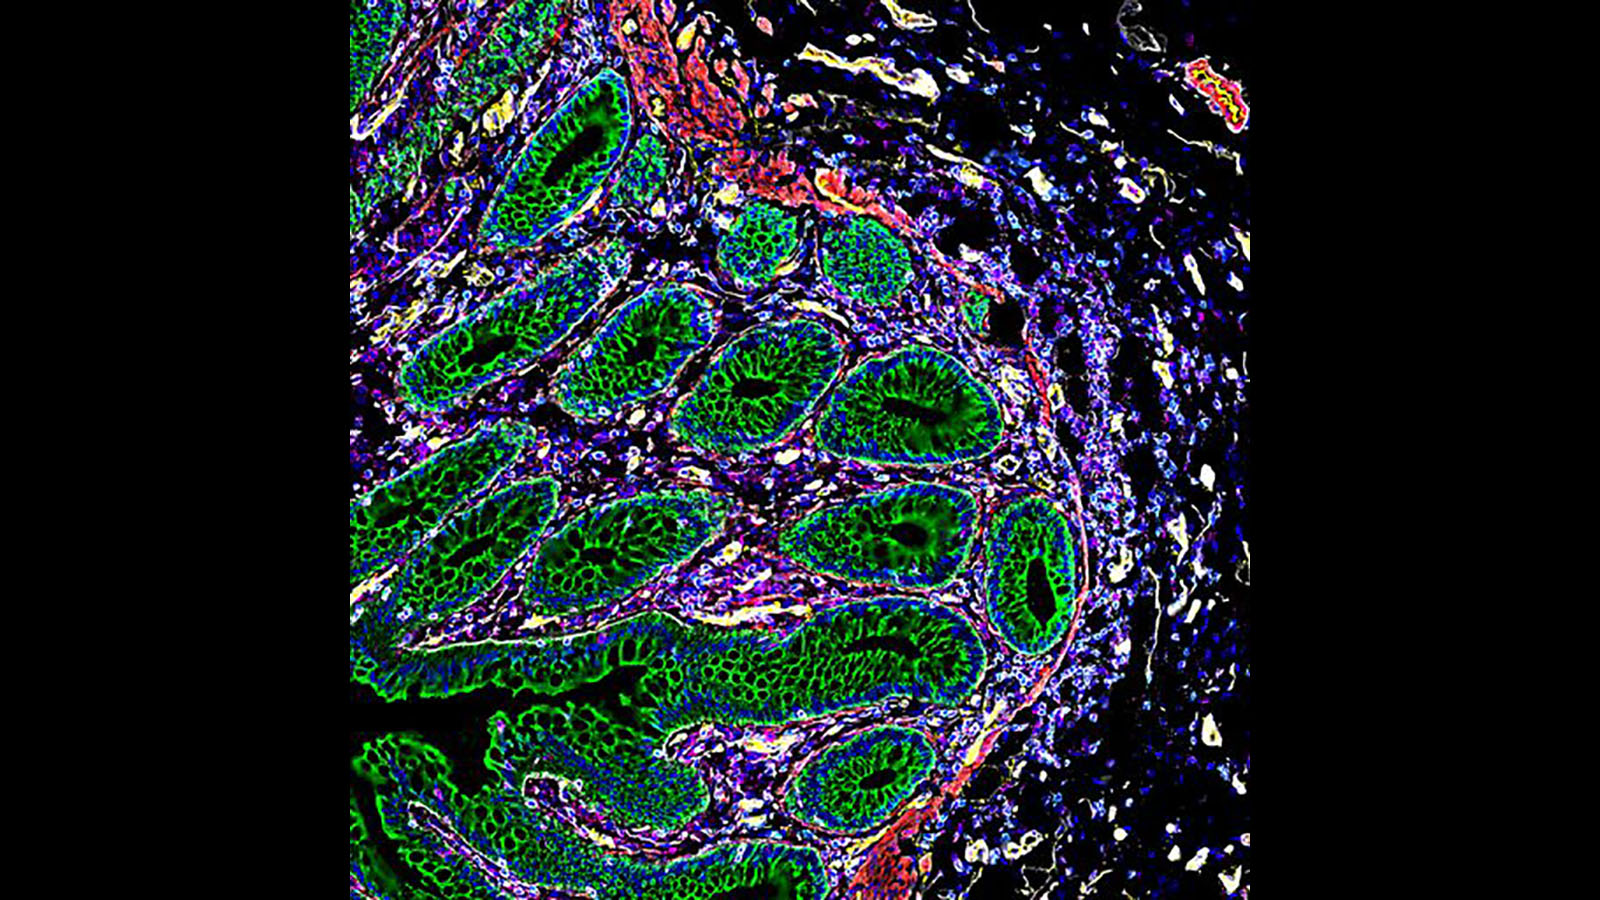 #CODEX image of healthy human intestine courtesy of Dr. John Hickey at the Nolan lab at Stanford University